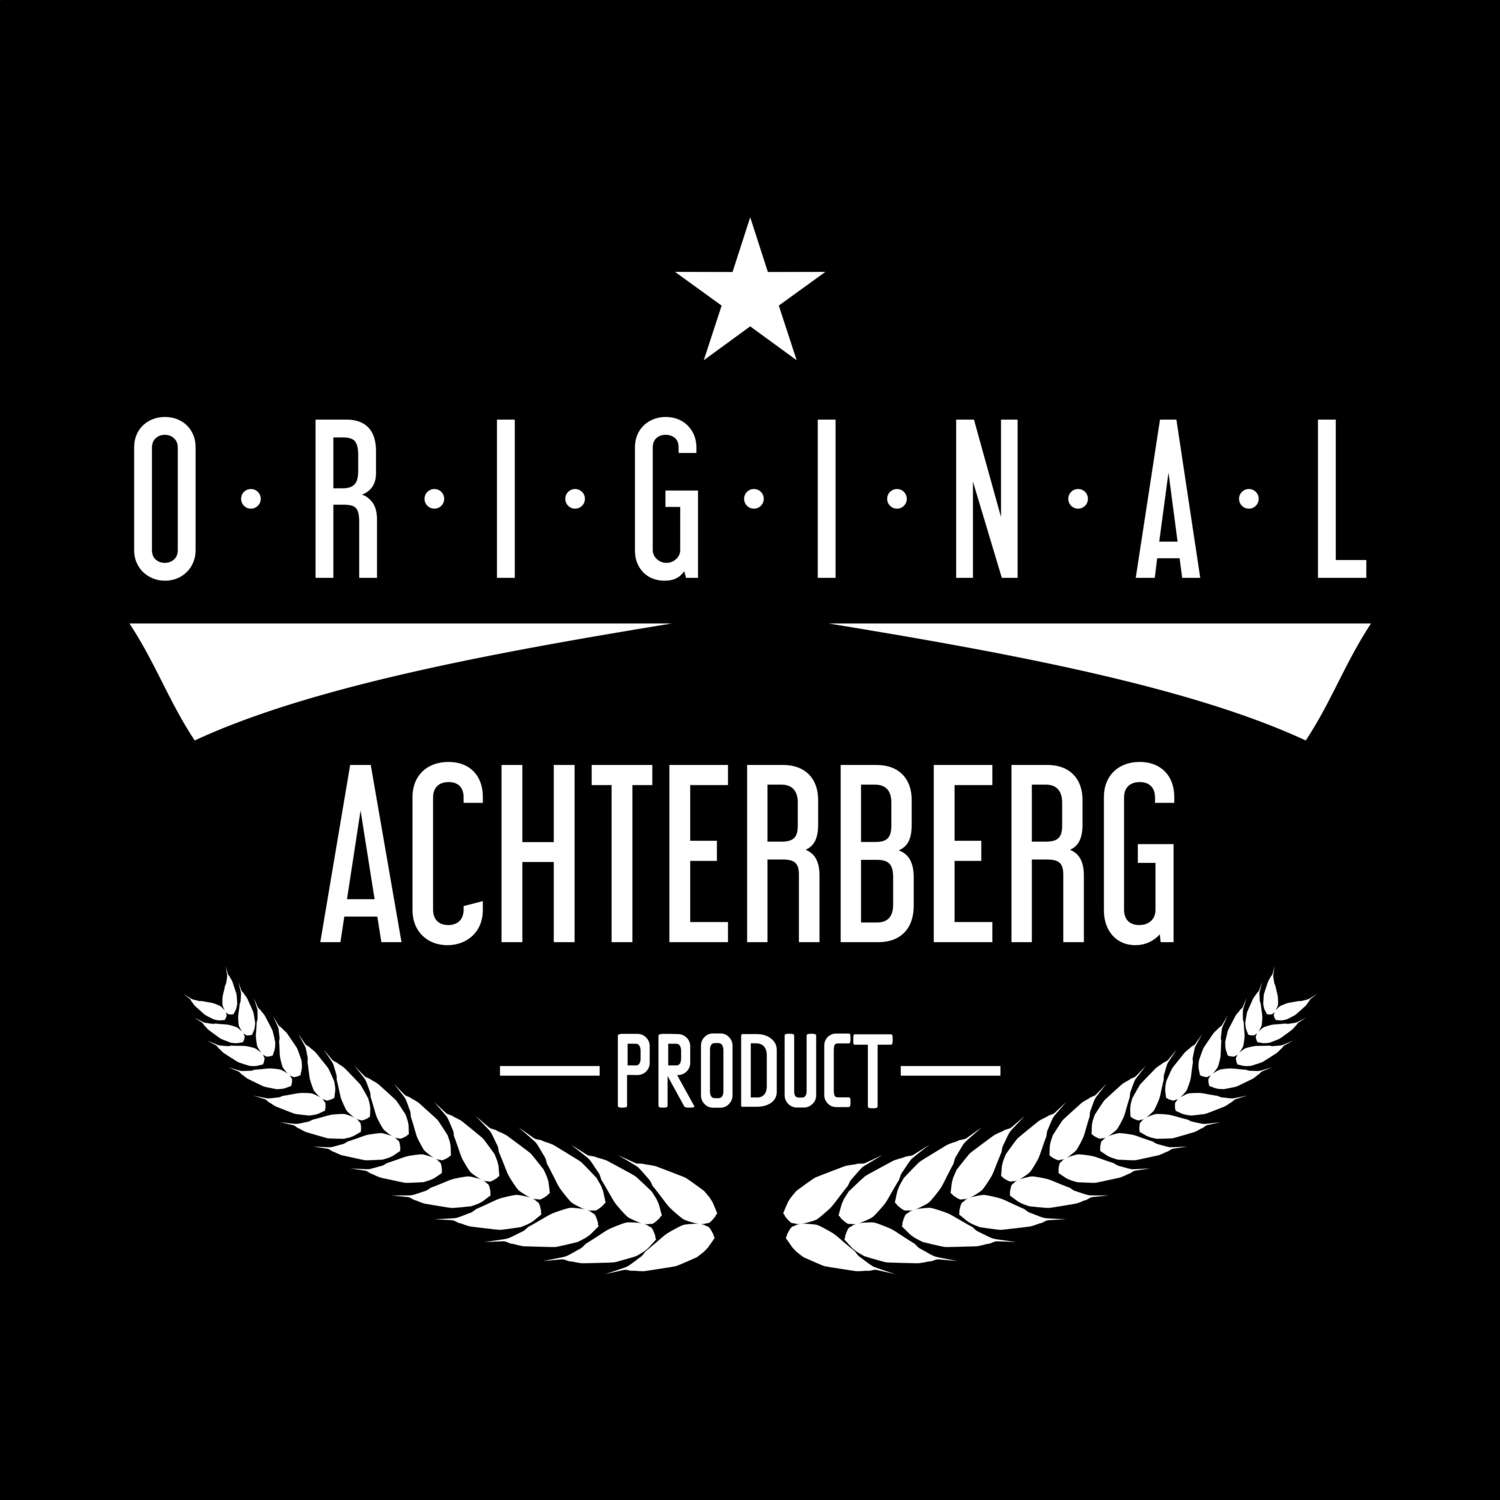 Achterberg T-Shirt »Original Product«